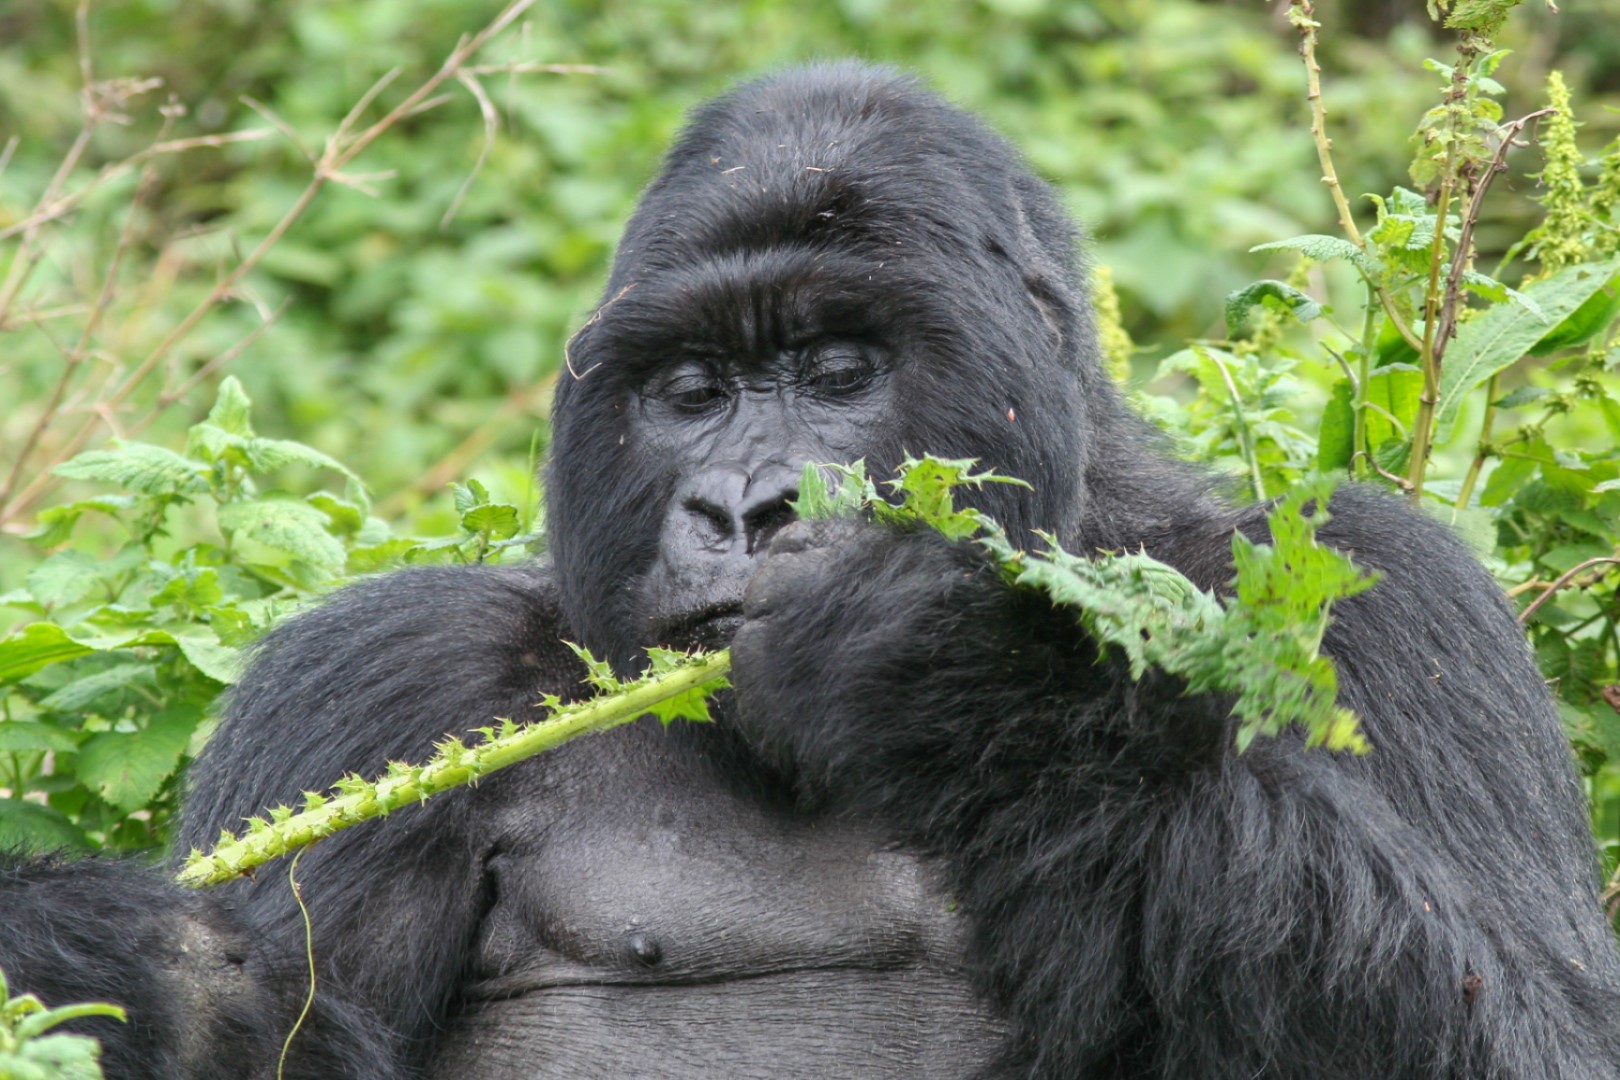 An Epic Adventure Of Hiking Rwenzori And Gorilla Trekking In Uganda.